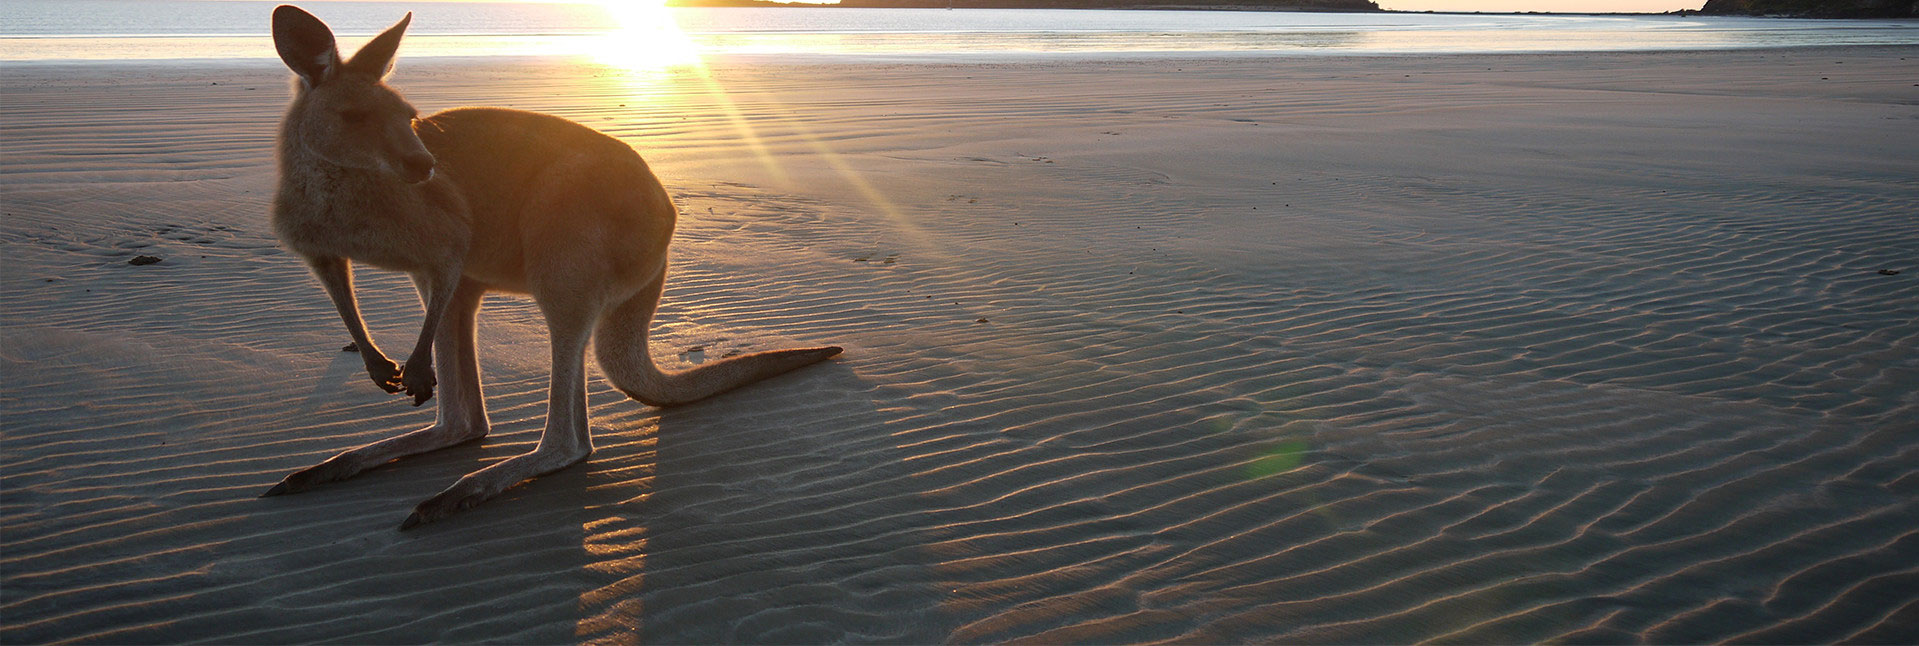 Kangaroo at a beach